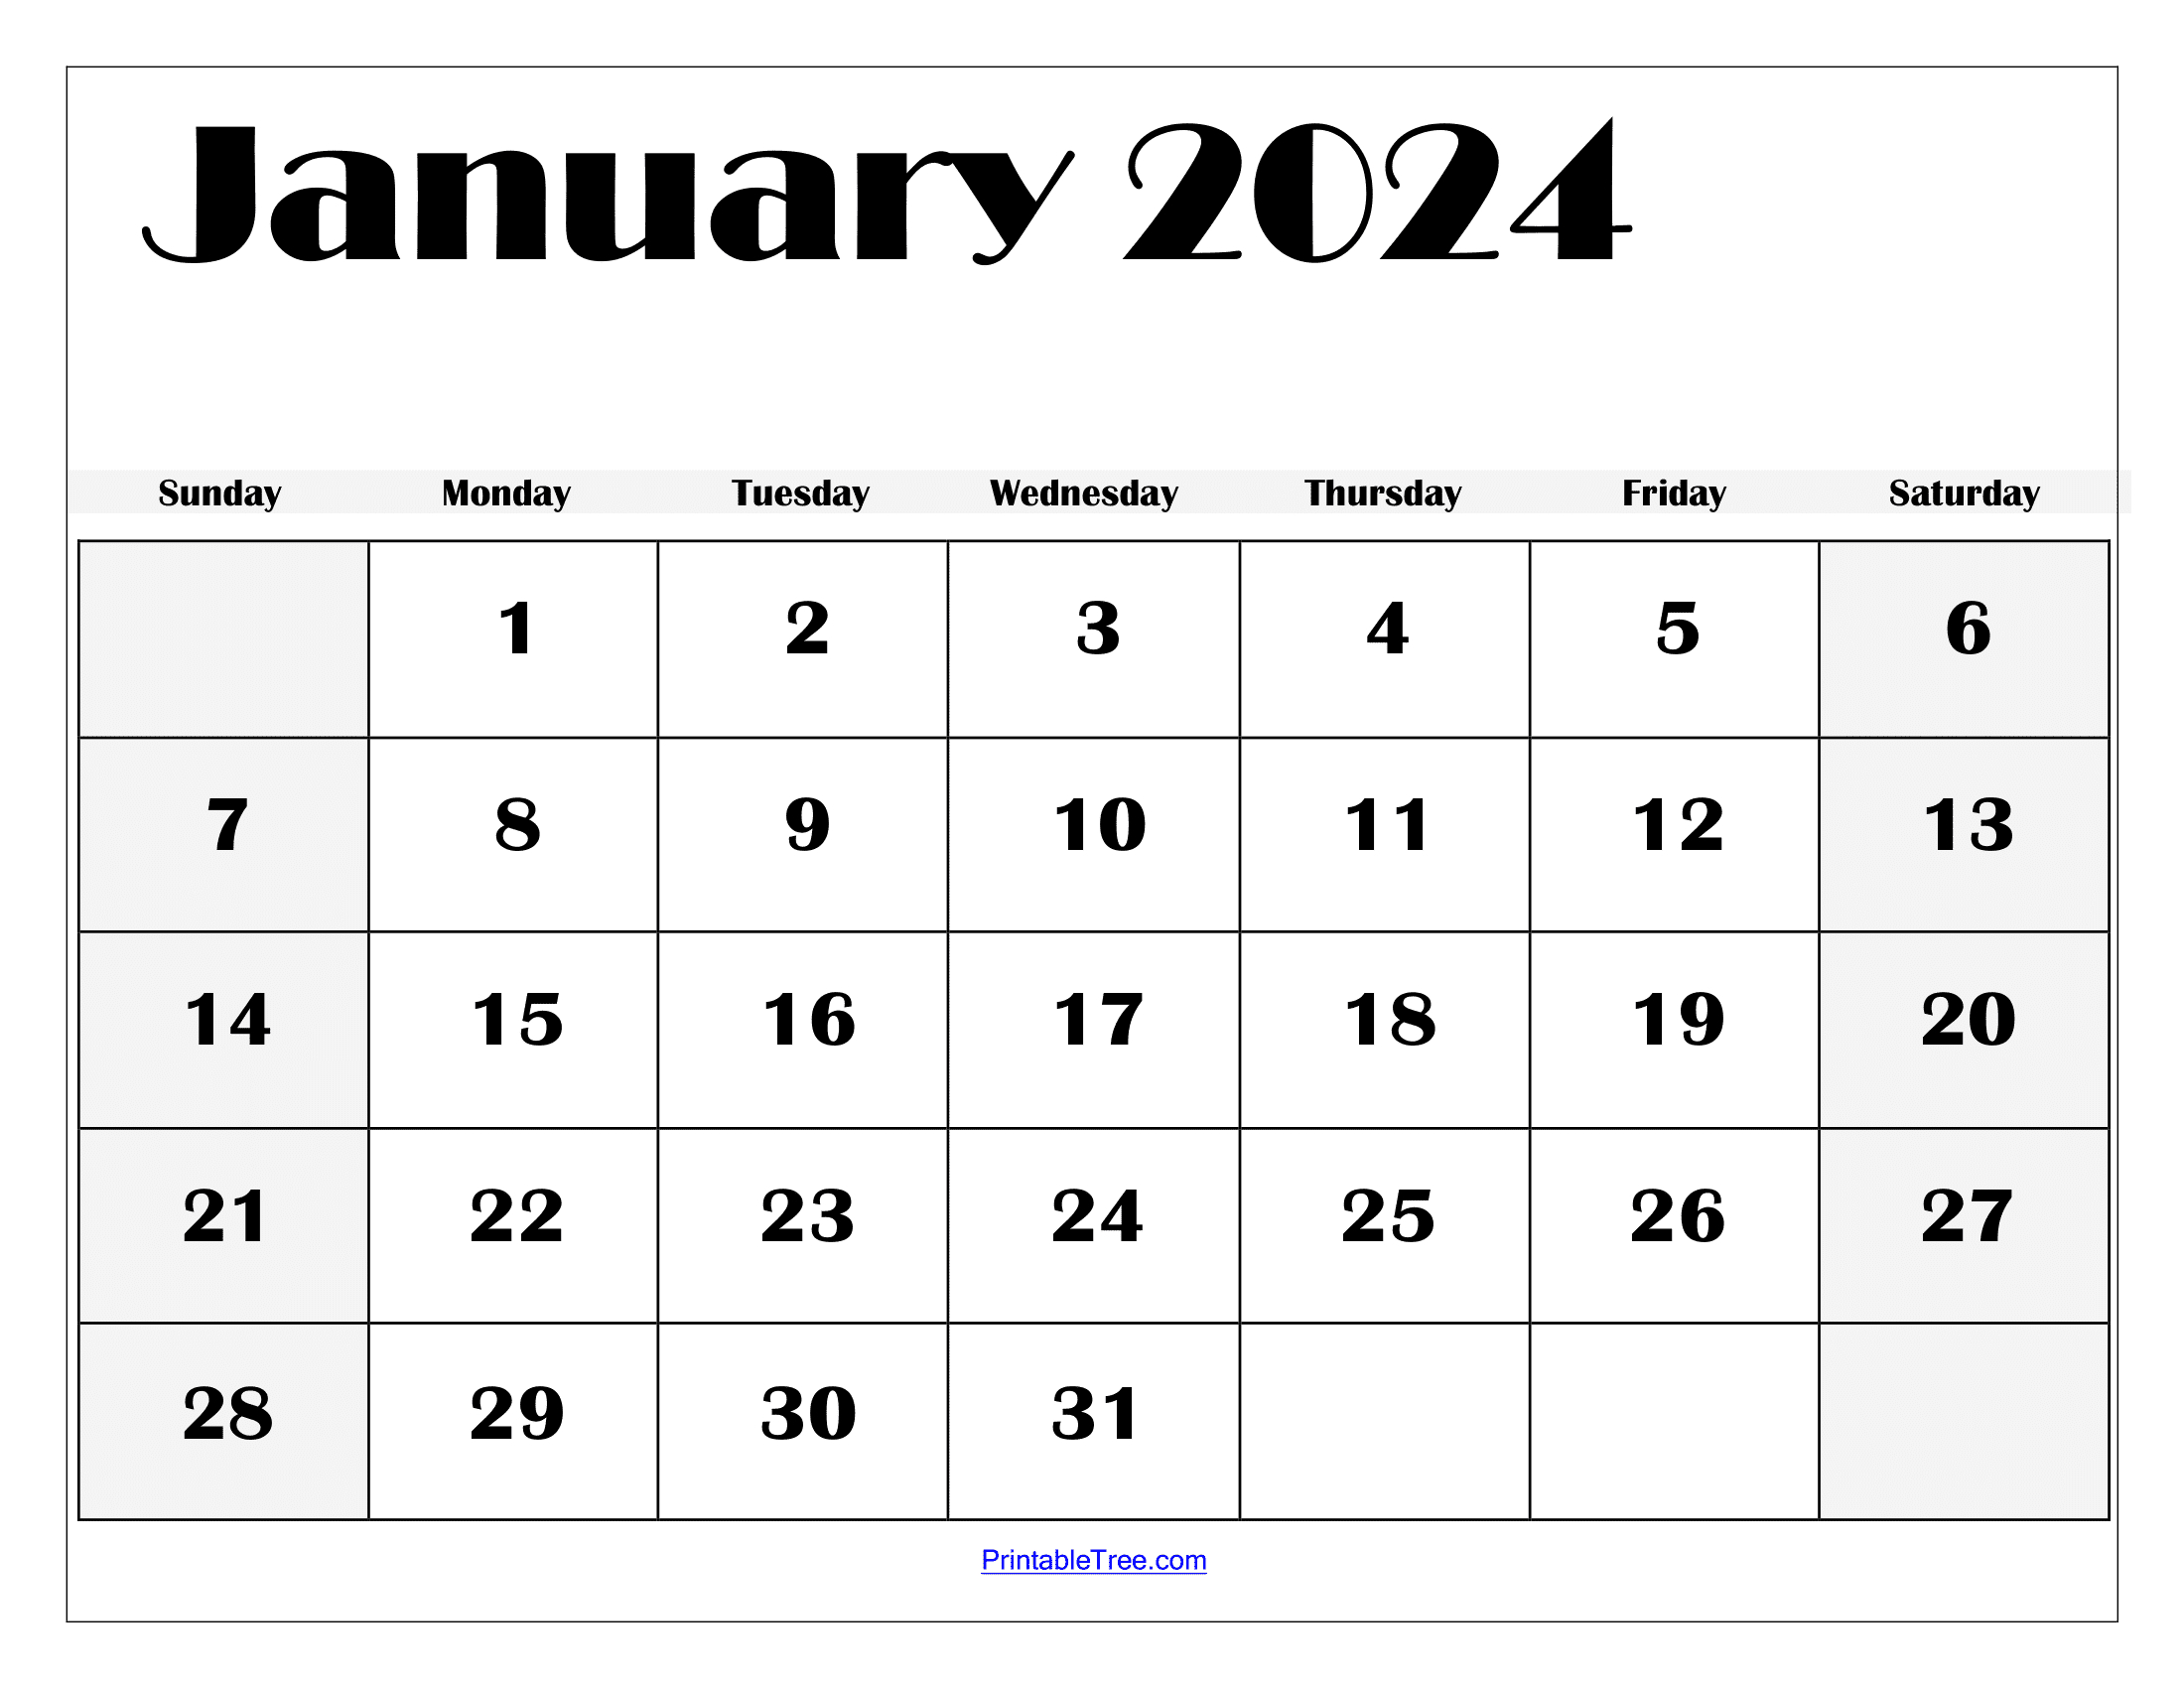 January 2024 Calendar Printable Pdf Template With Holidays | January 2024 Calendar